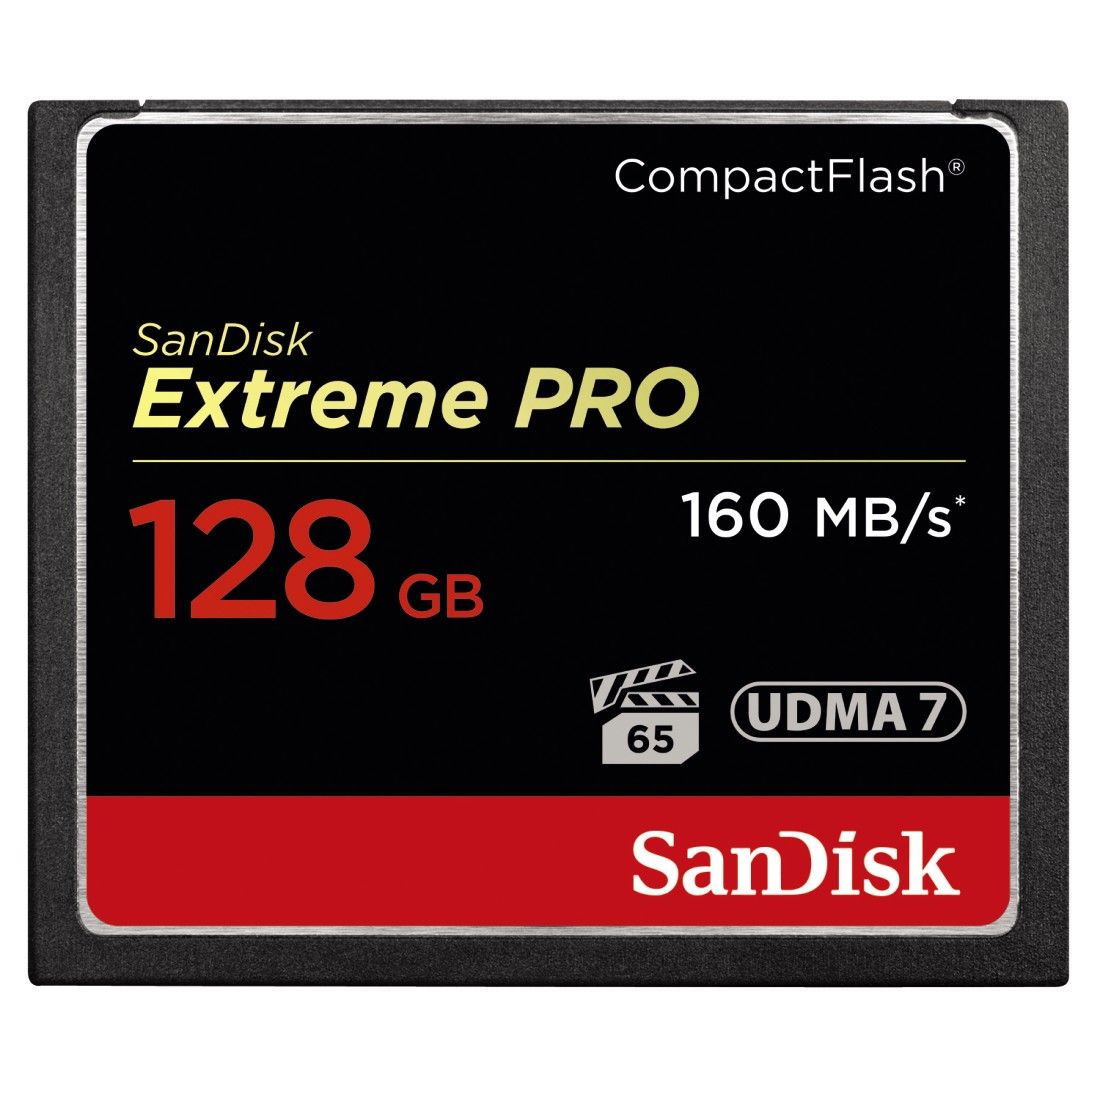 SanDisk Extreme Pro CompactFlash™ 128GB memóriakártya (160 MB/s sebesség)